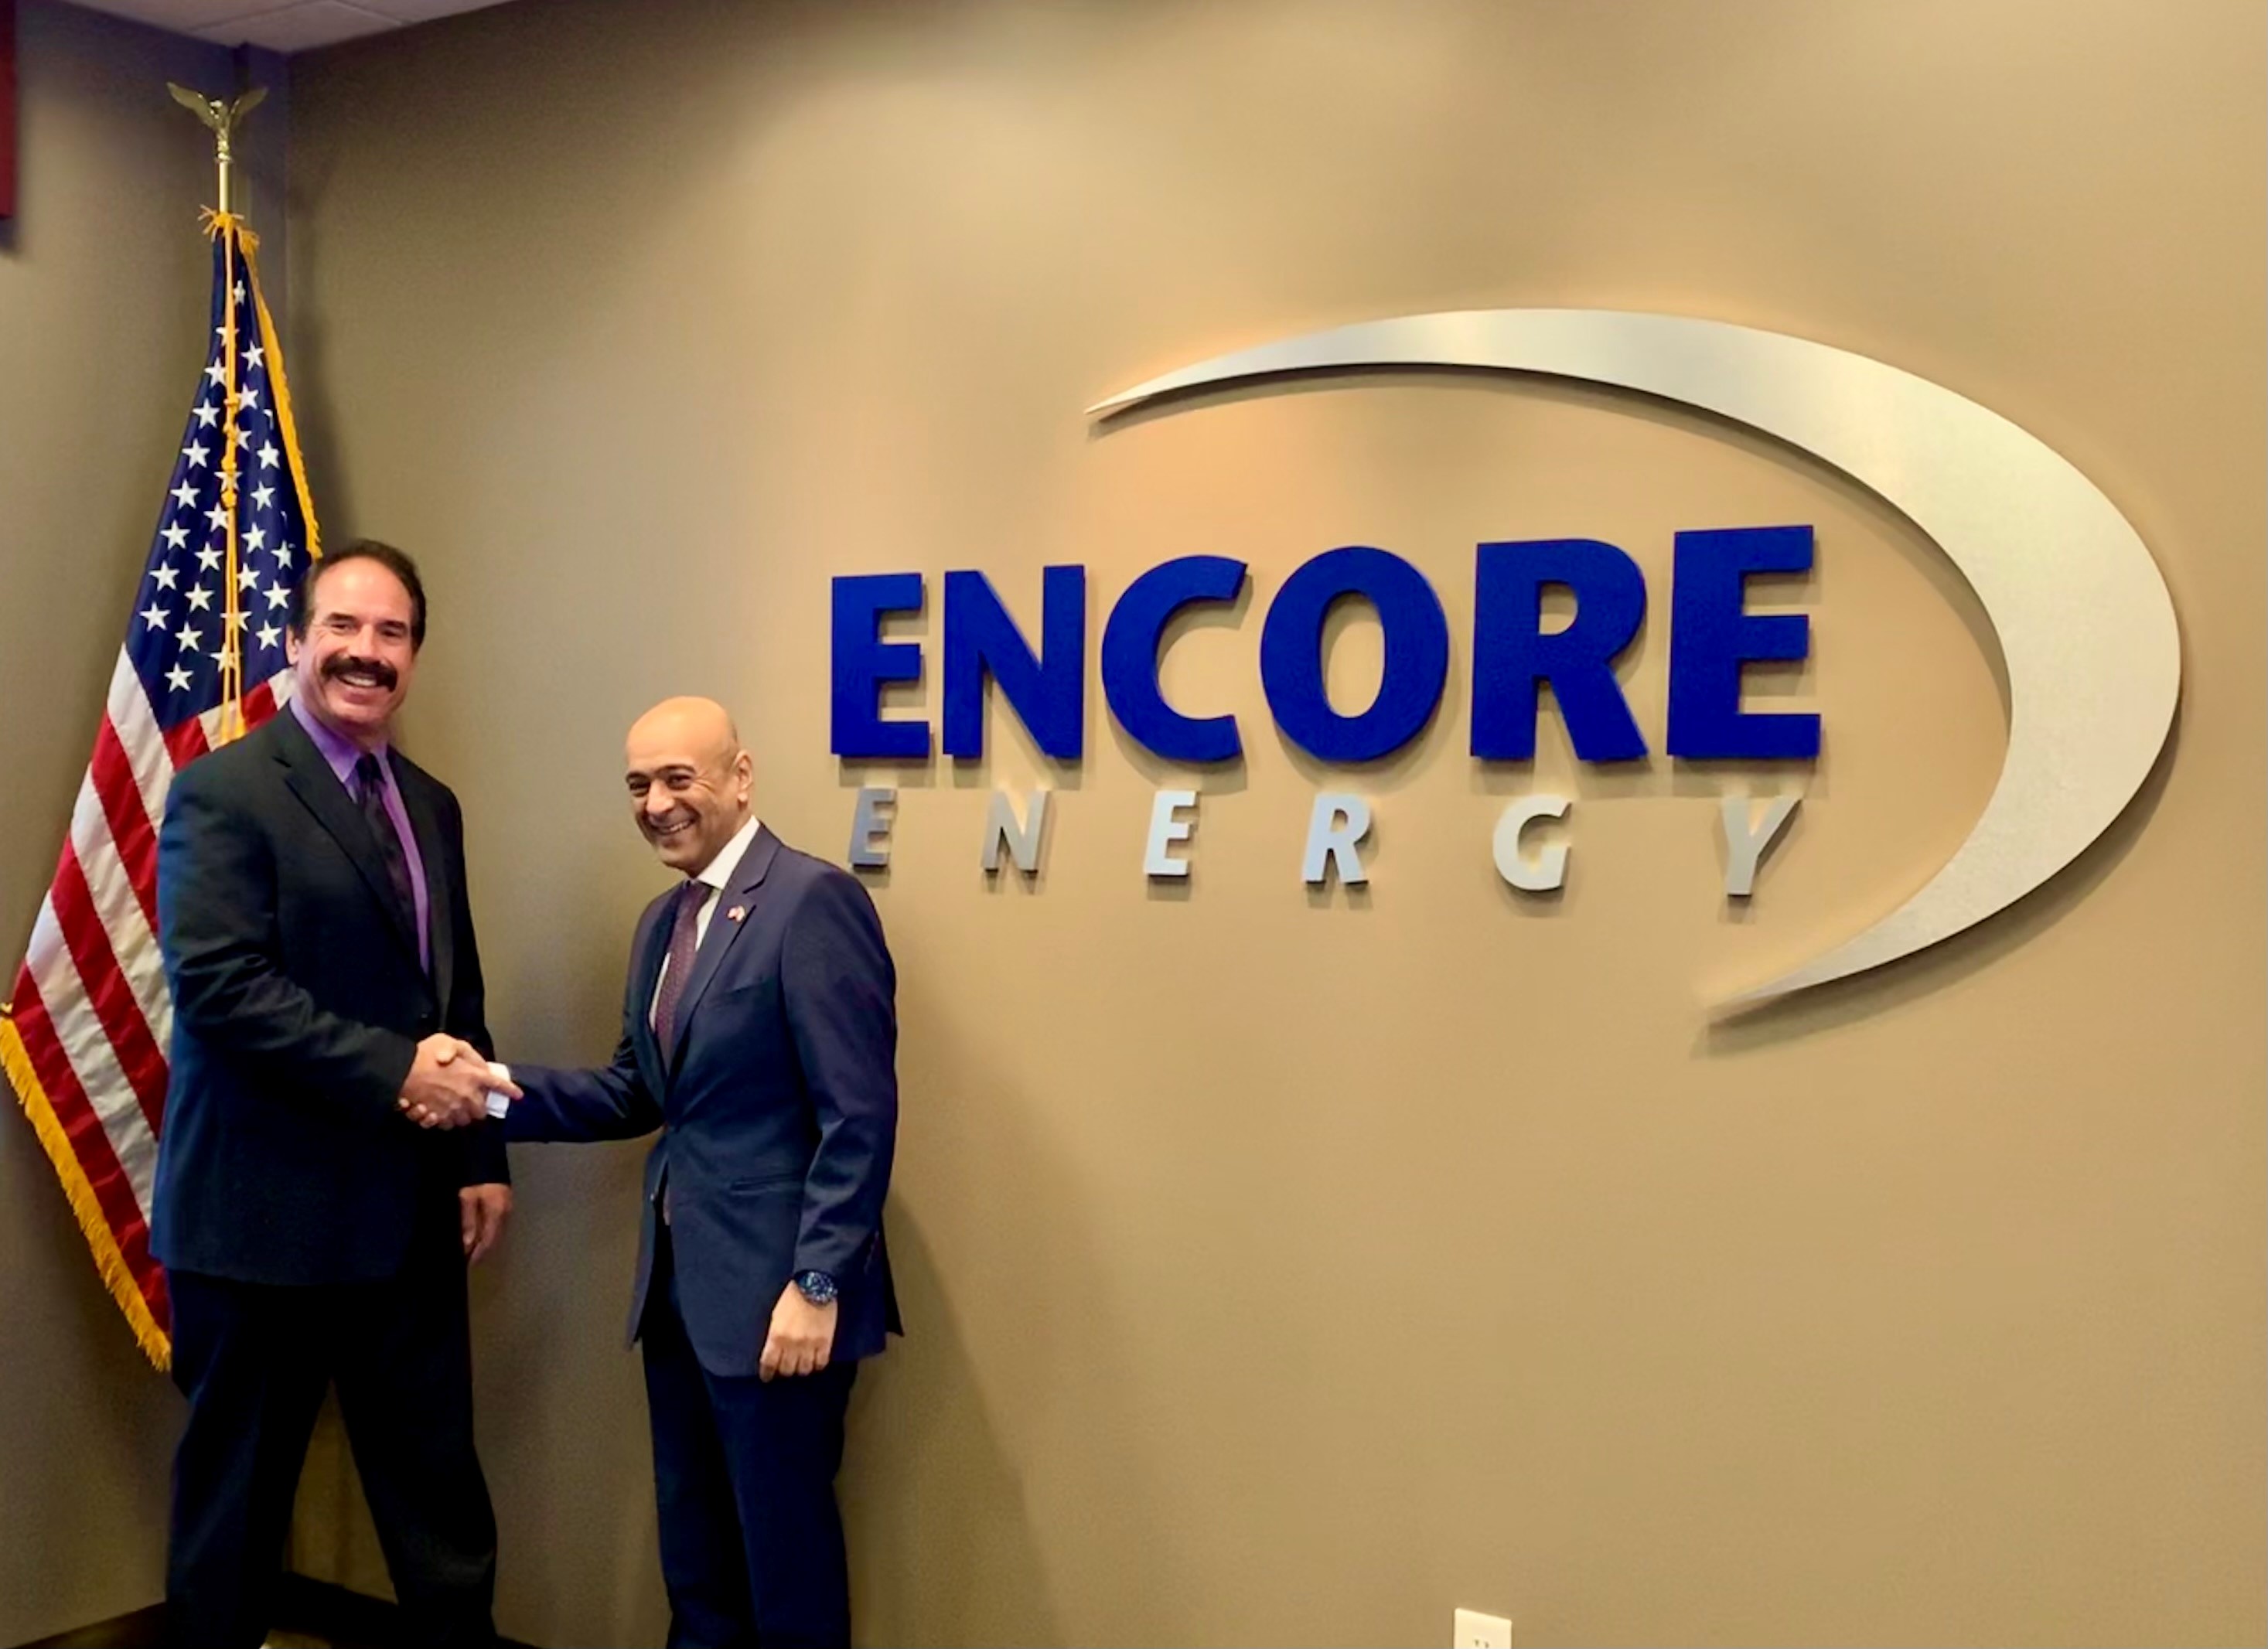 Encore Energy’s President and CEO, Ken Graeber, welcomes H.E. Ambassador Jasem Mohamed Albudaiwi